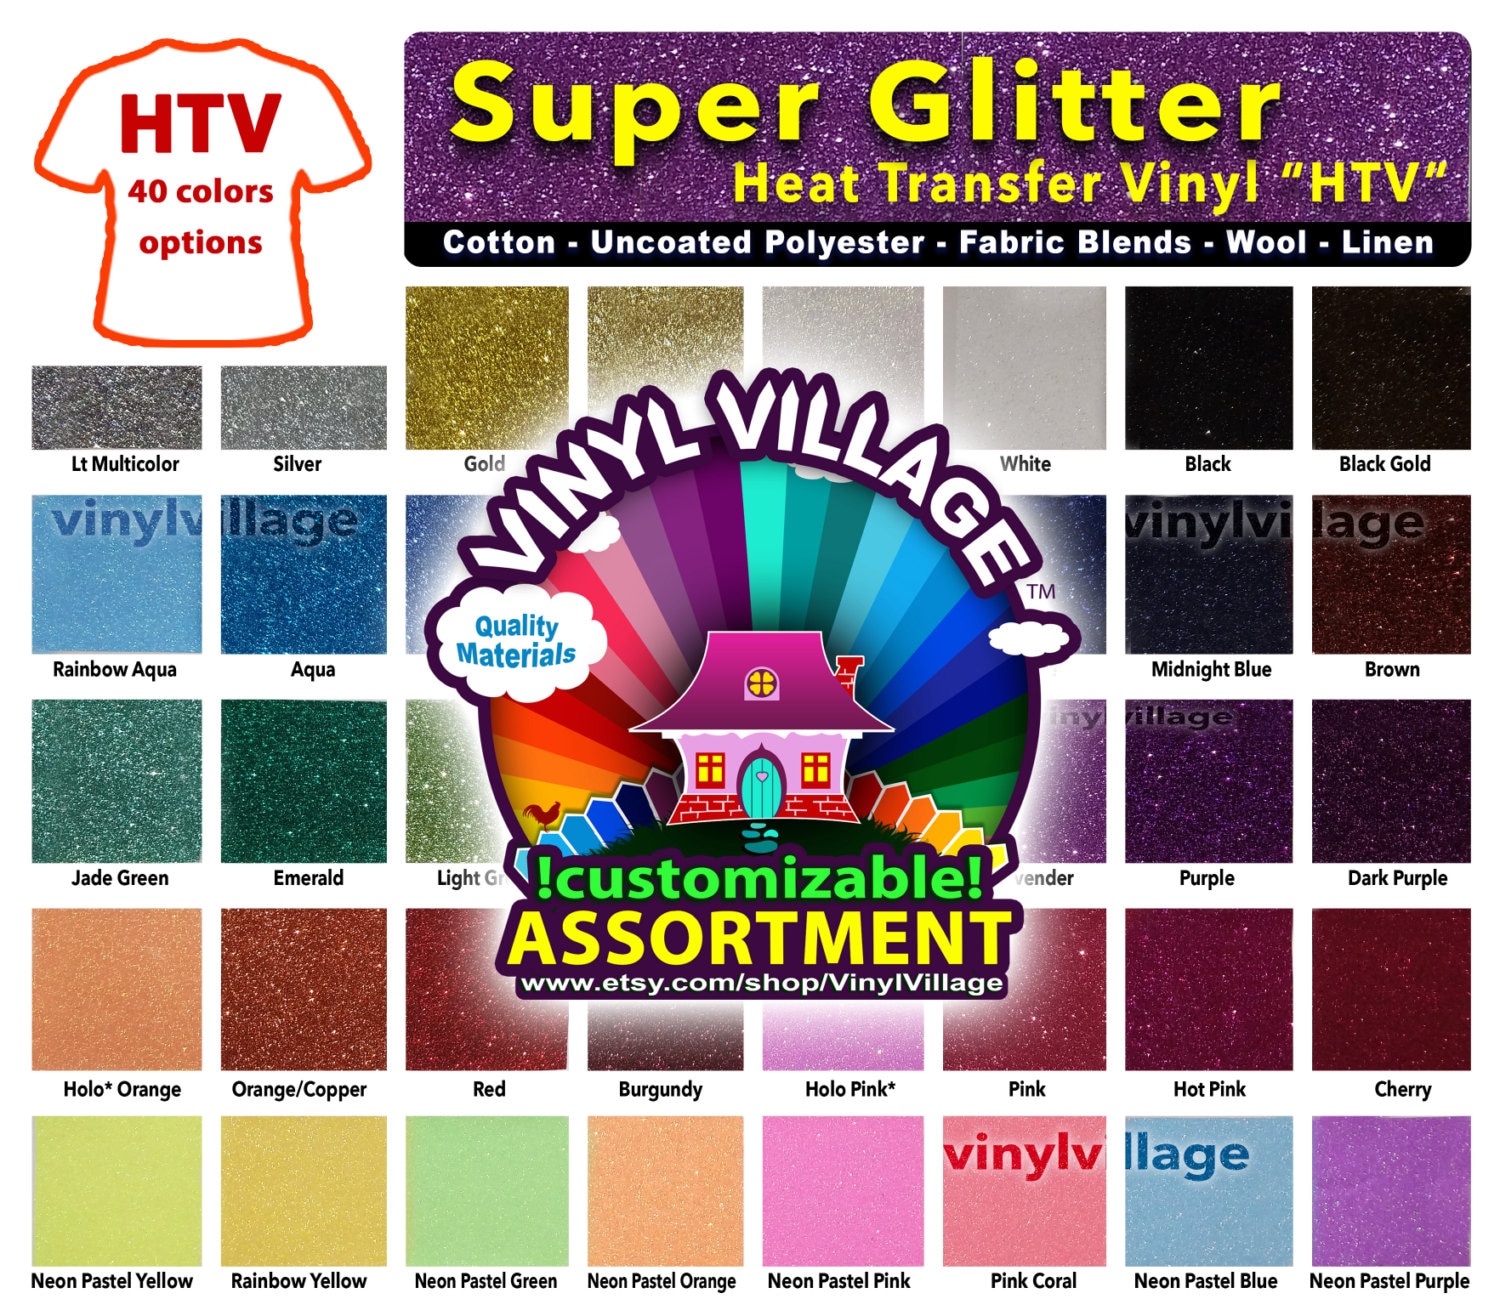 Glitter HTV 12″ x5 Foot Sale